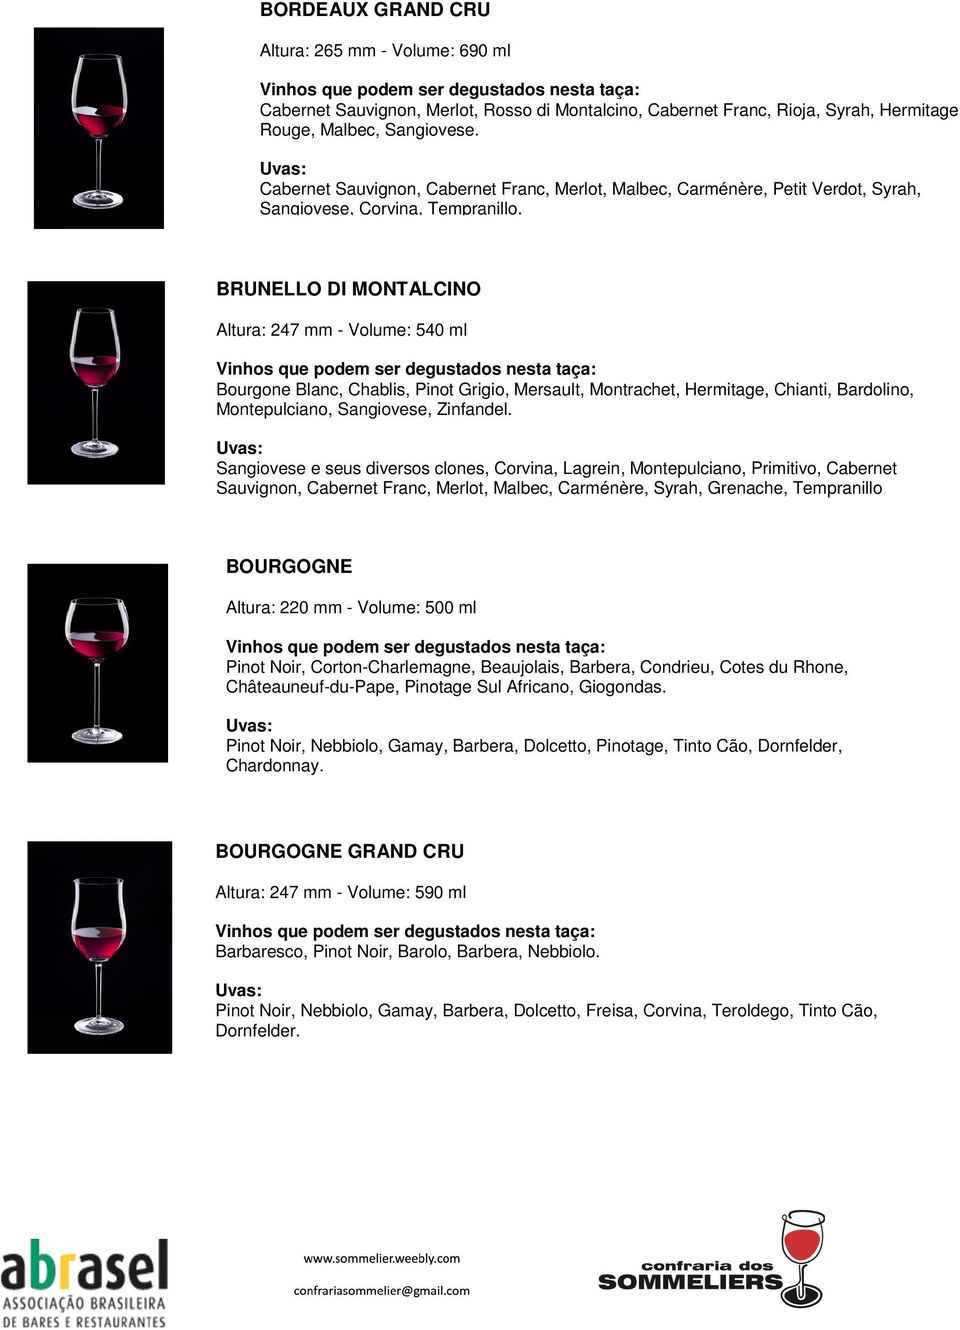 BRUNELLO DI MONTALCINO Altura: 247 mm - Volume: 540 ml Bourgone Blanc, Chablis, Pinot Grigio, Mersault, Montrachet, Hermitage, Chianti, Bardolino, Montepulciano, Sangiovese, Zinfandel.